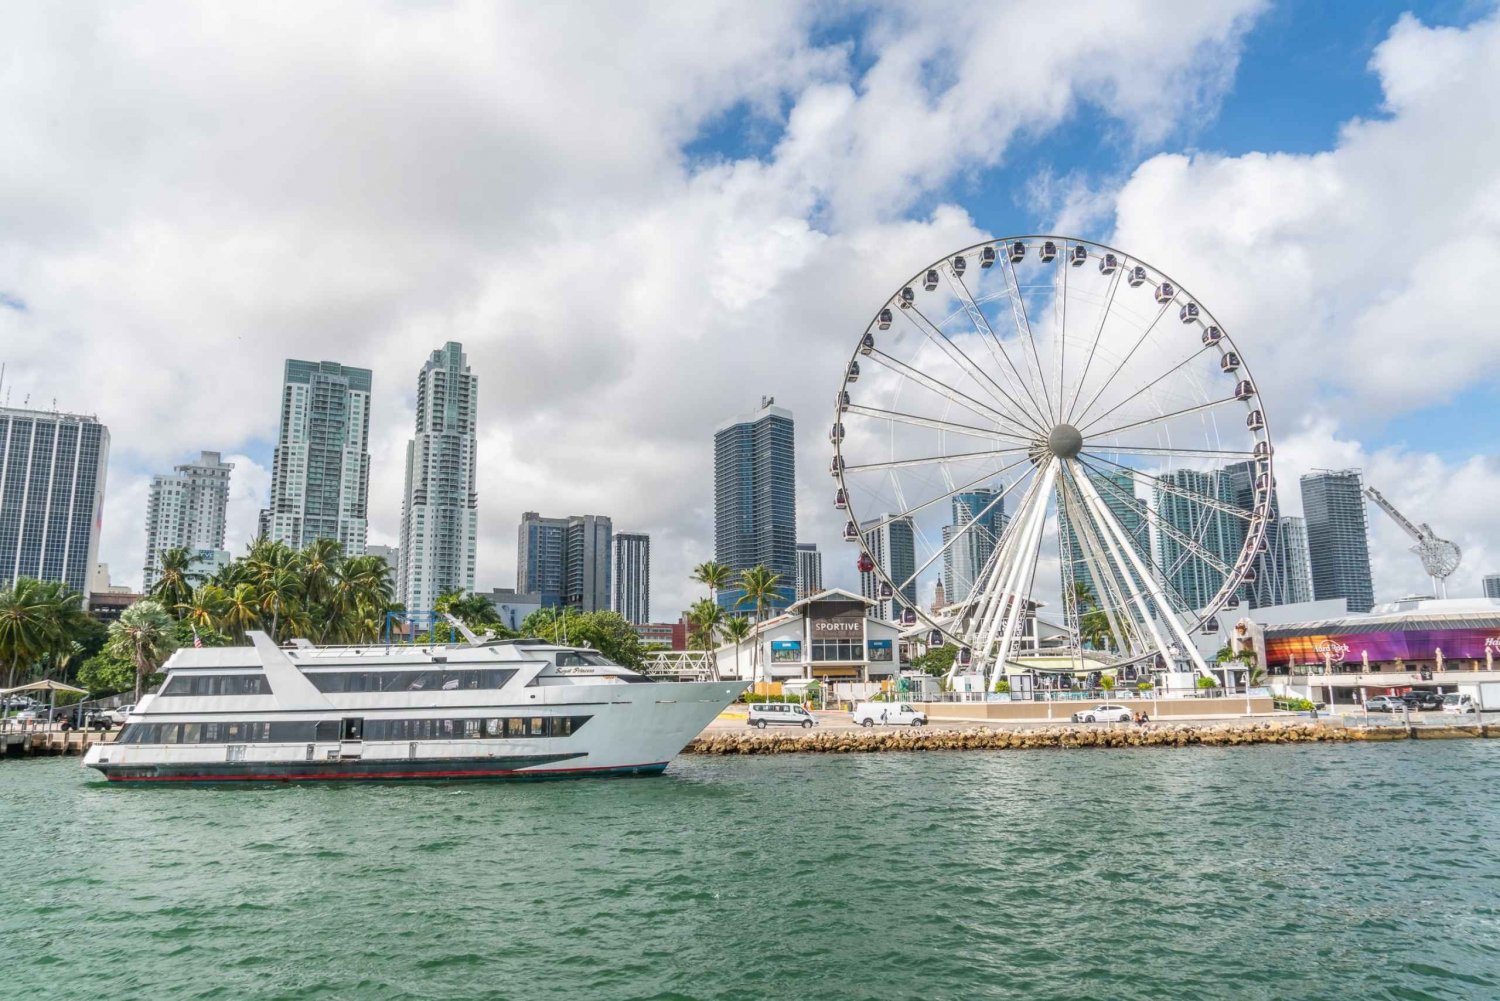 Miami: Original Millionaire's Row Cruise